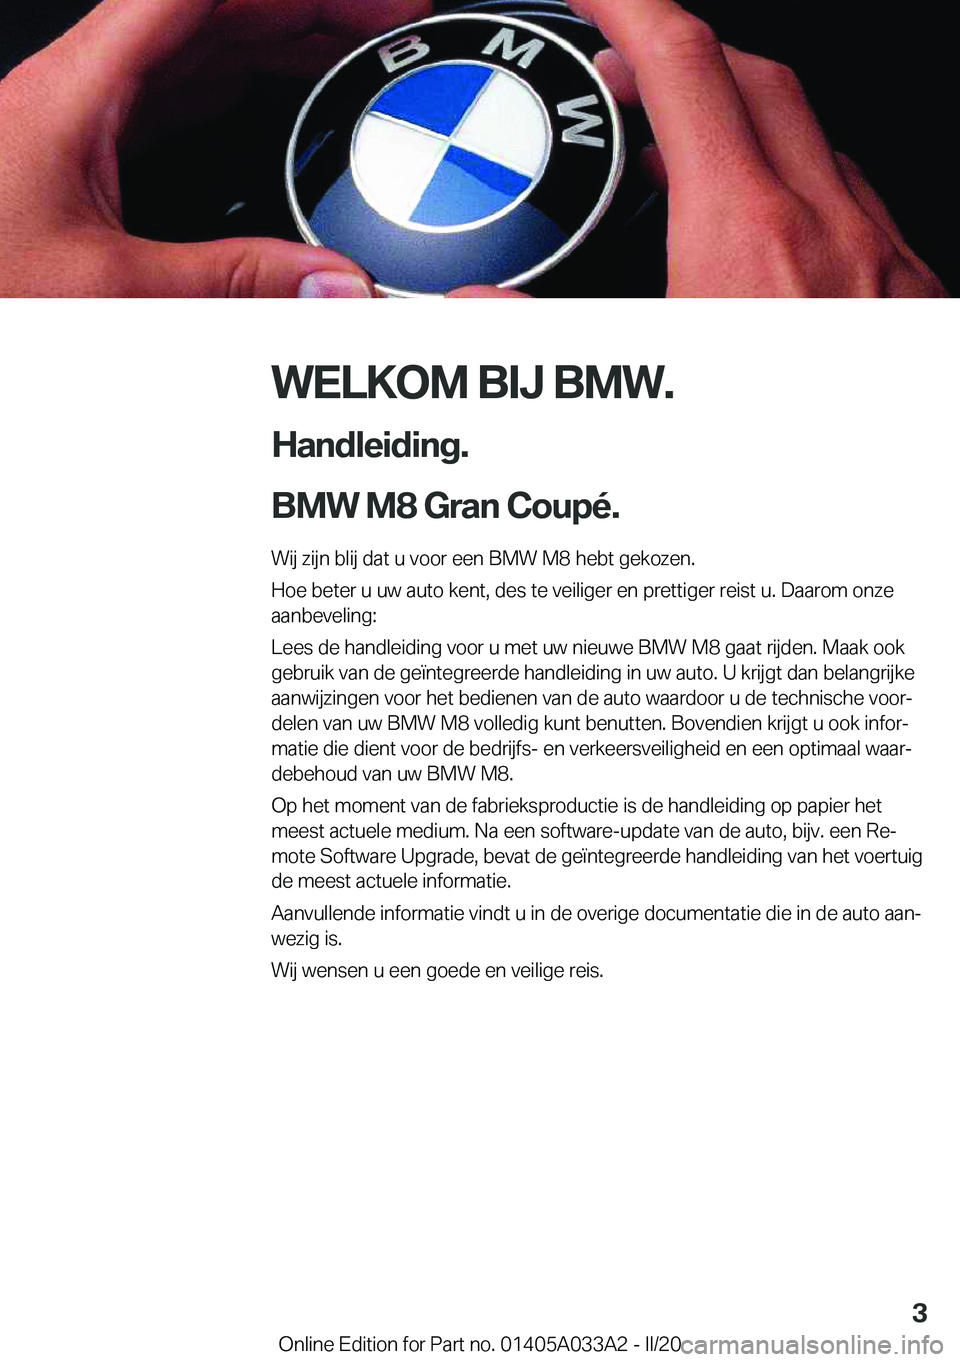 BMW M8 GRAN COUPE 2020  Instructieboekjes (in Dutch) �W�E�L�K�O�M��B�I�J��B�M�W�.
�H�a�n�d�l�e�i�d�i�n�g�.
�B�M�W��M�8��G�r�a�n��C�o�u�p�